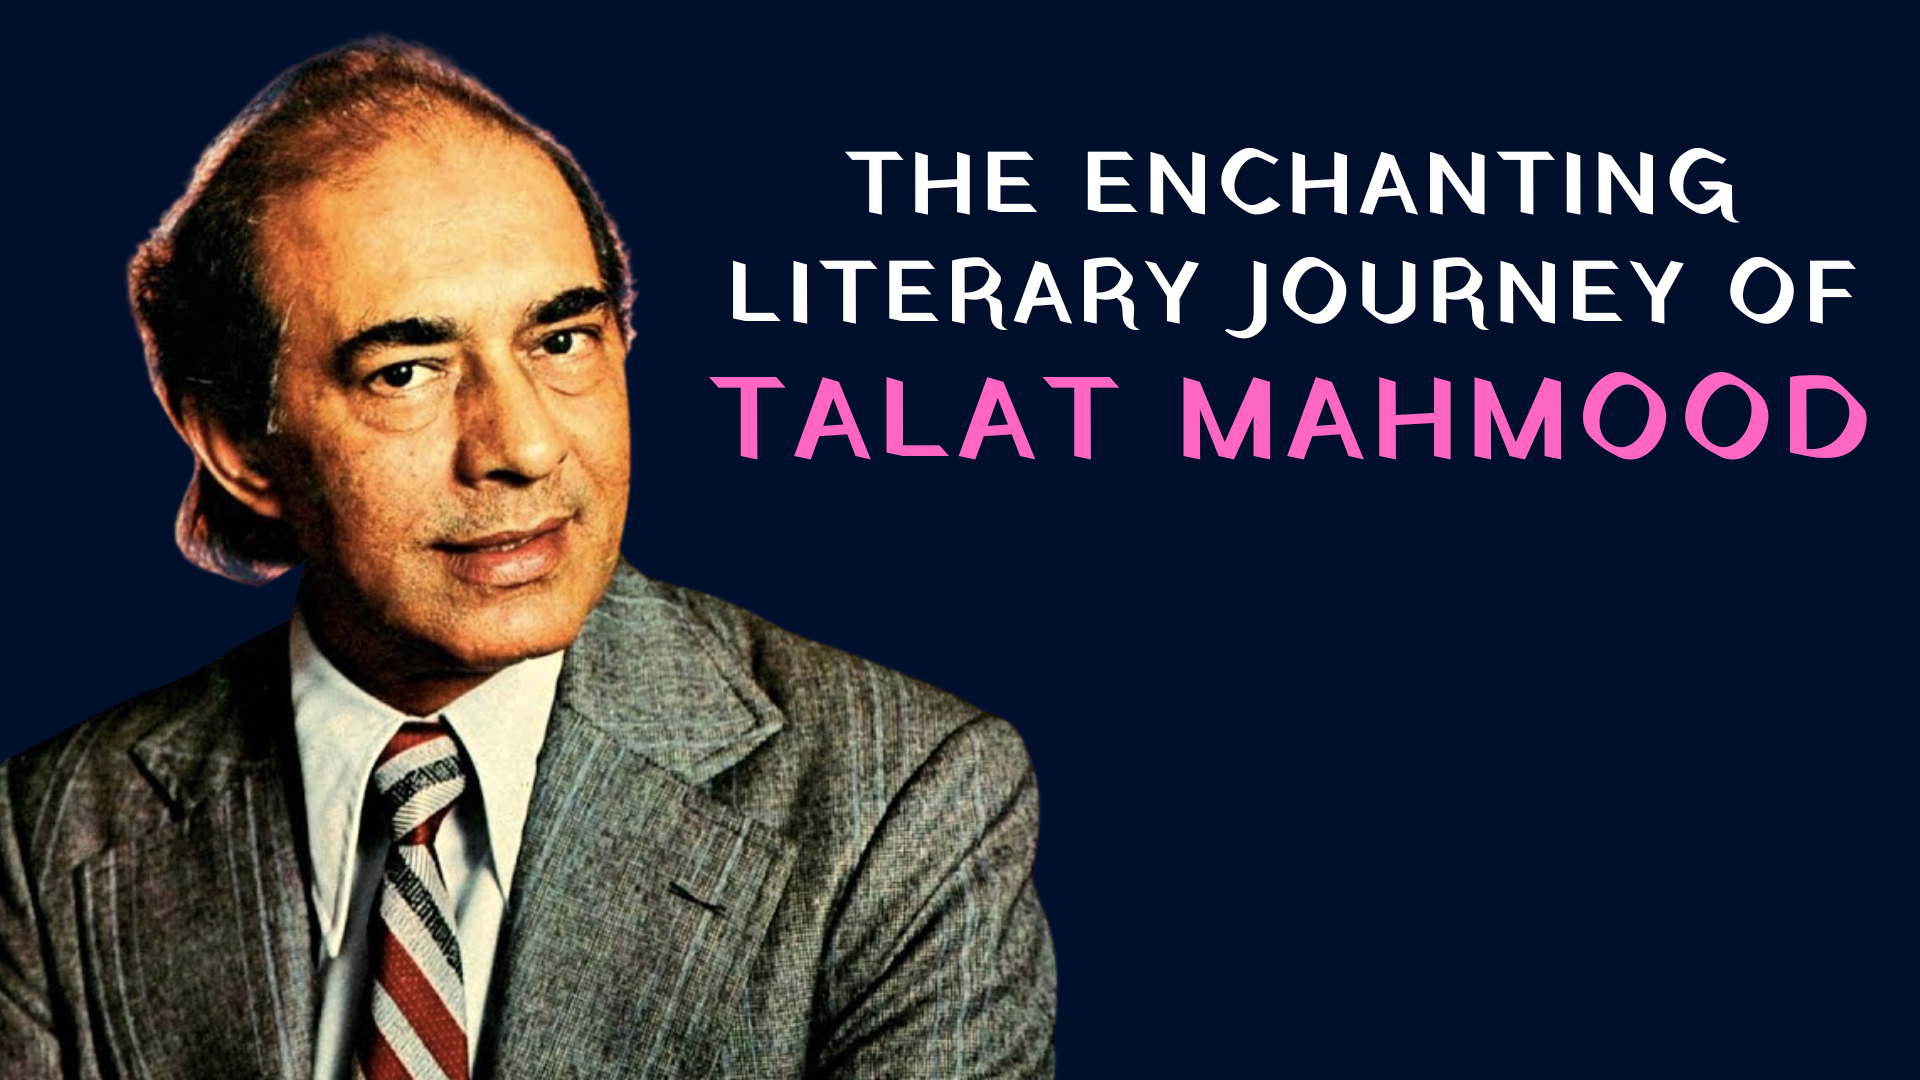 The Enchanting Literary Journey of Talat Mahmood's image